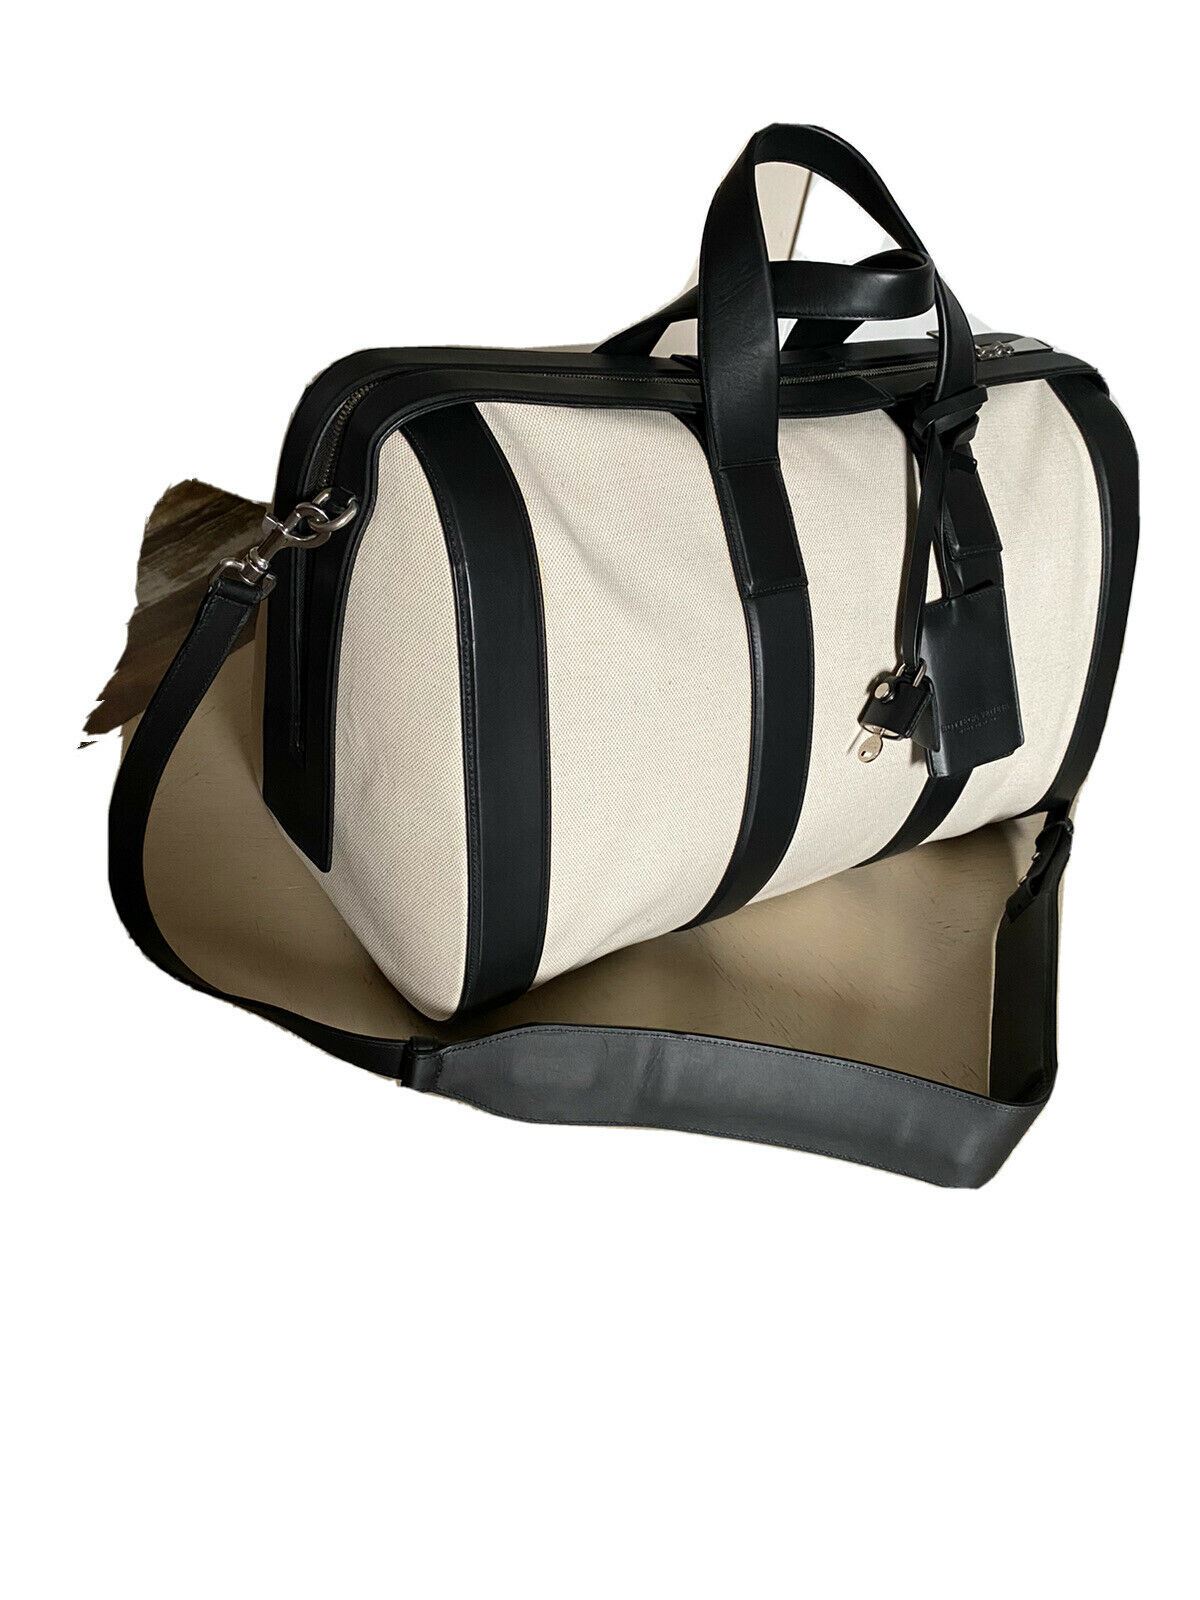 New $2750 Bottega Veneta Men Leather/Canvas Duffle Bag Black/Cream 577353